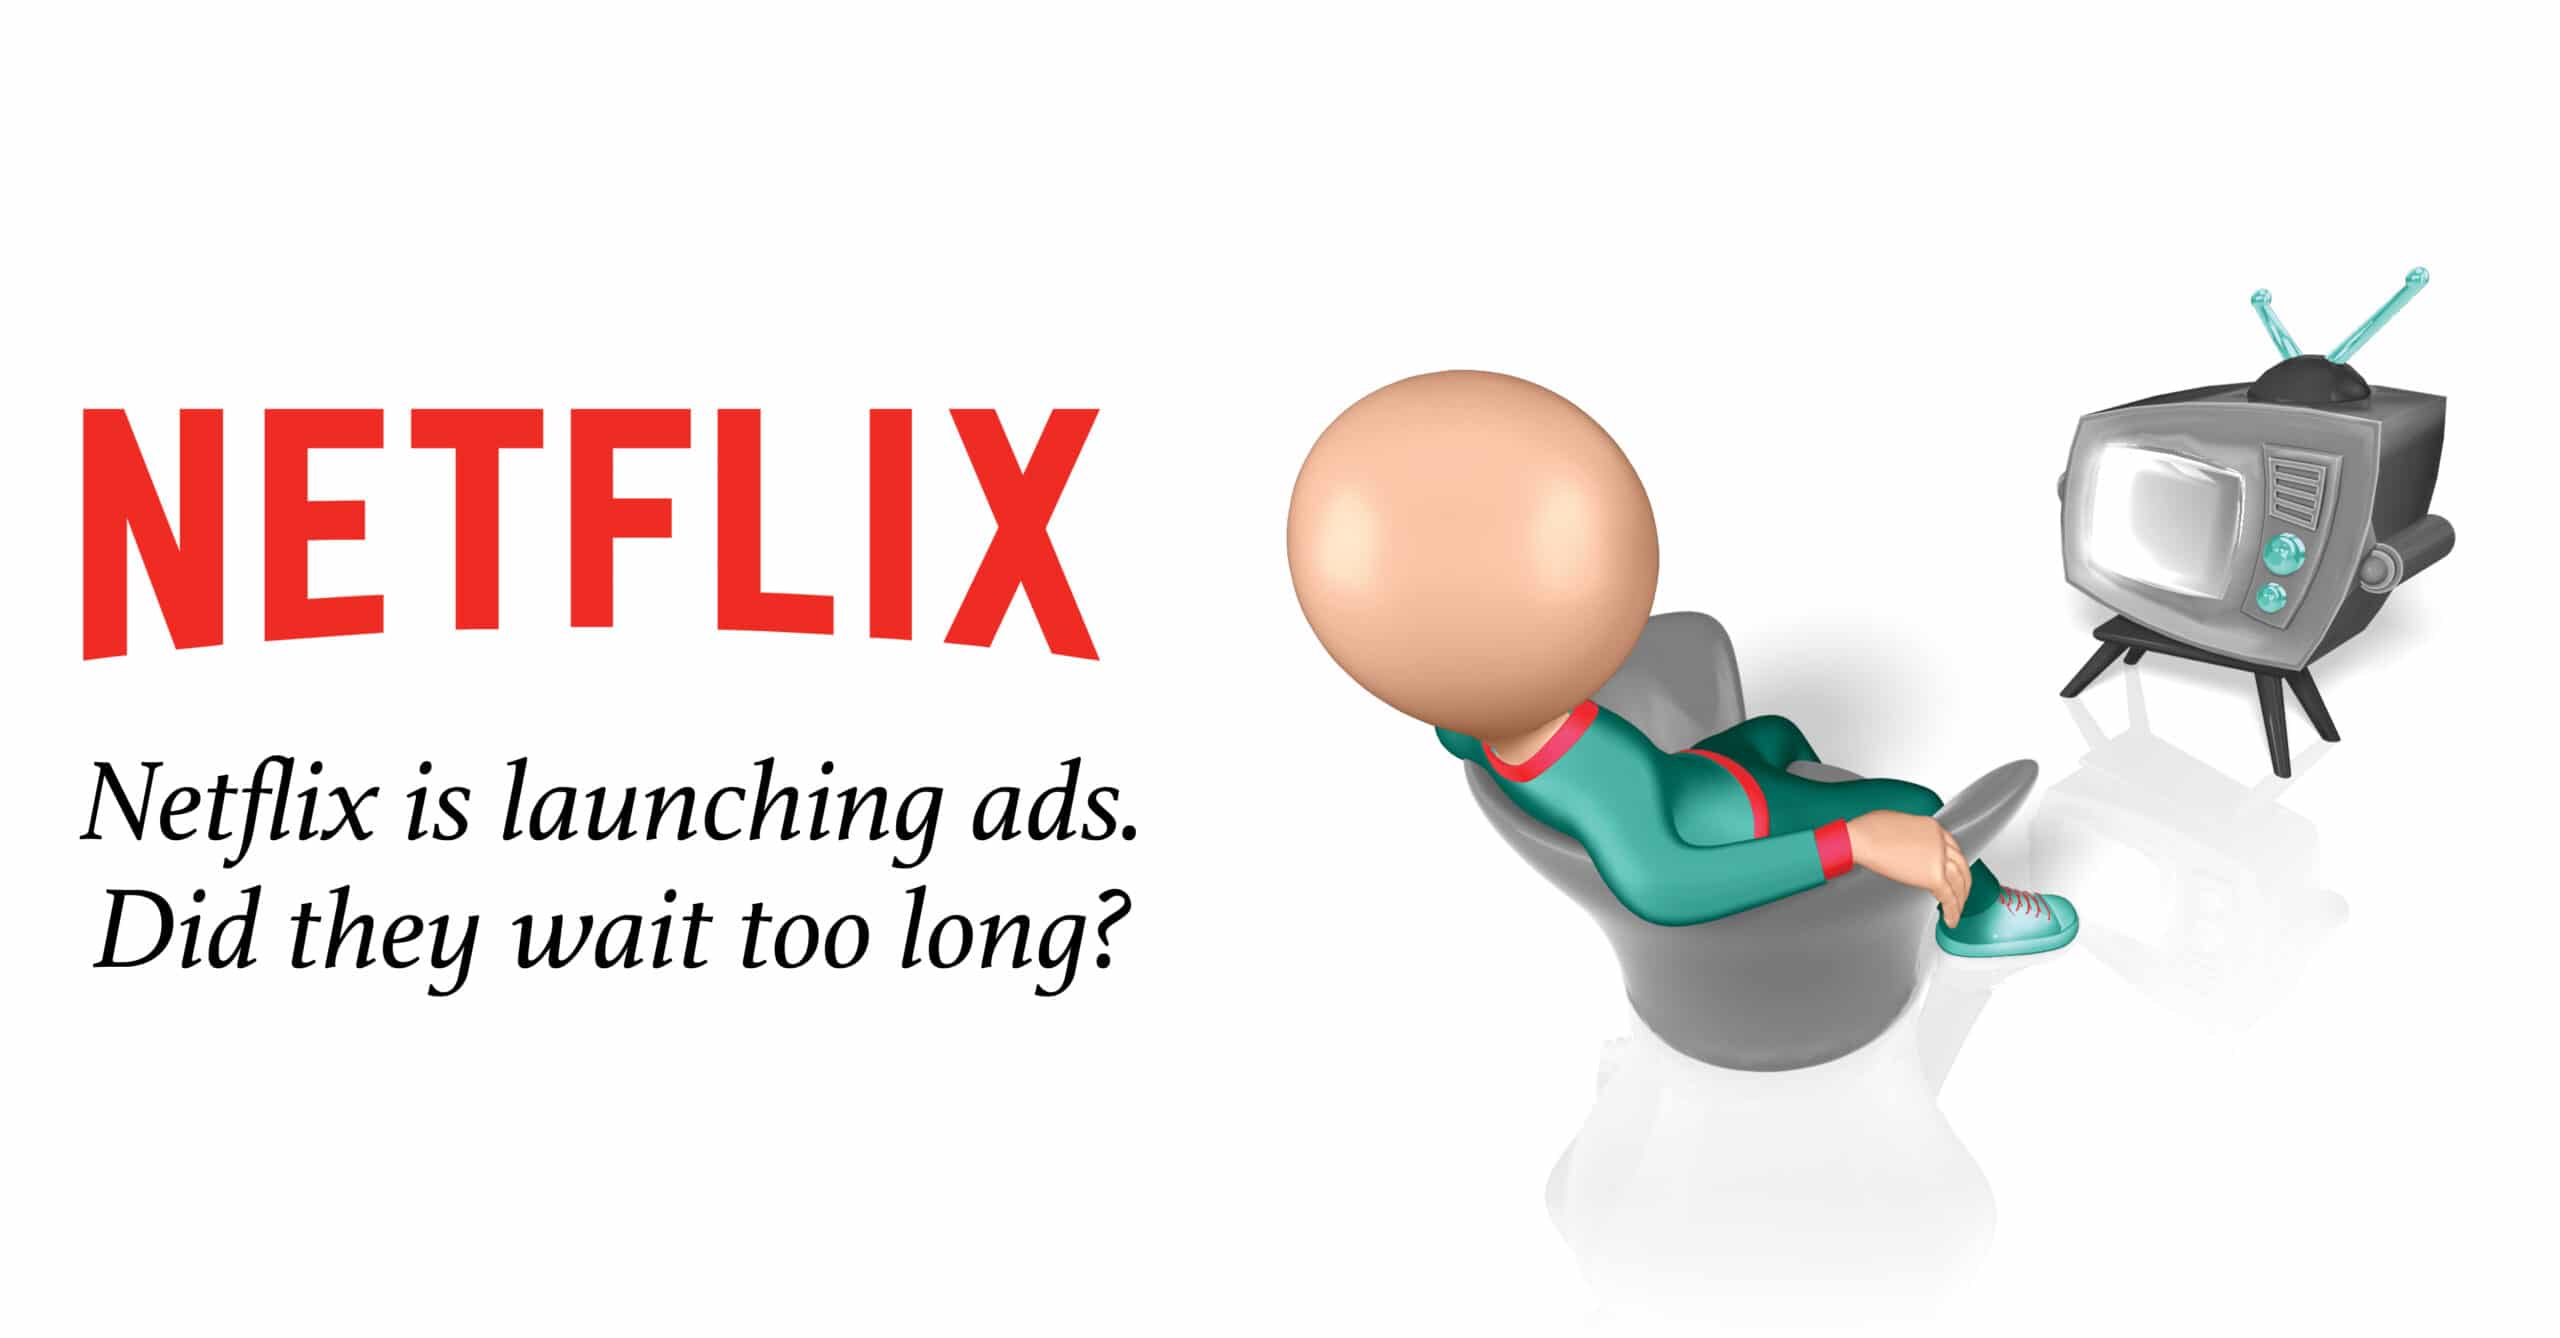 Netflix launches ads